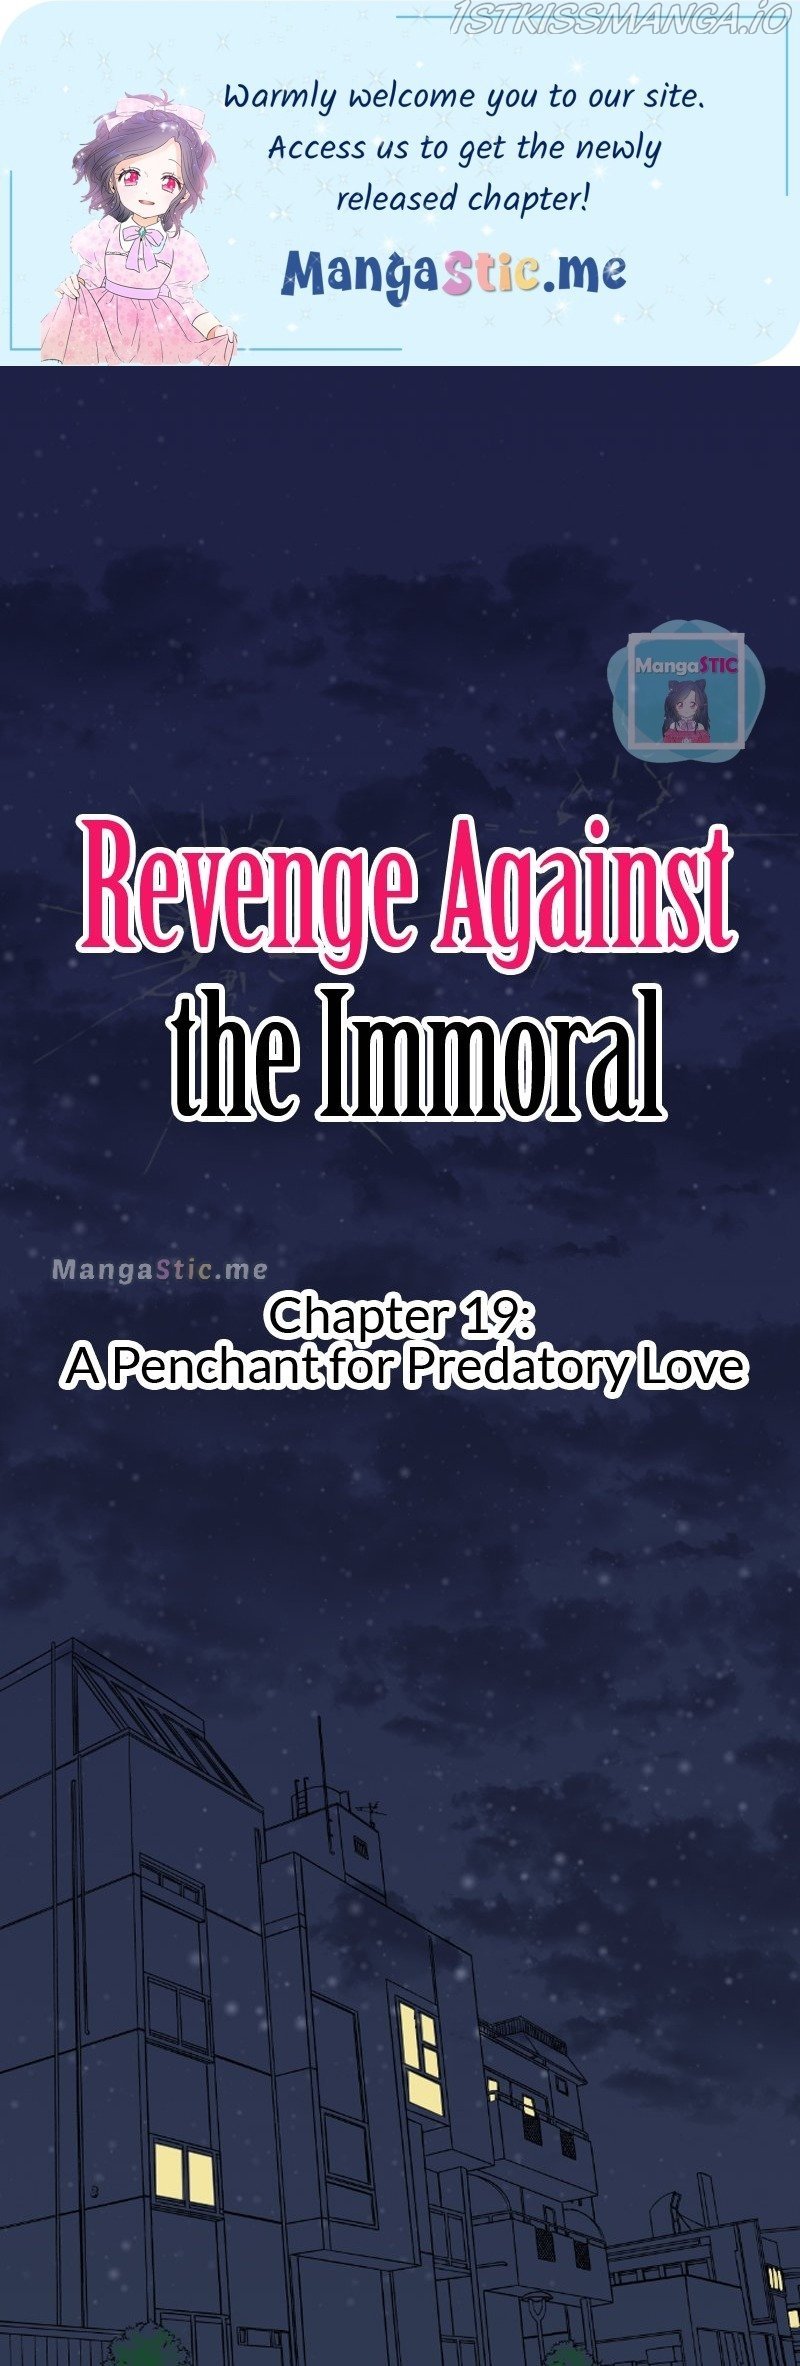 Revenge Against the Immoral chapter 19